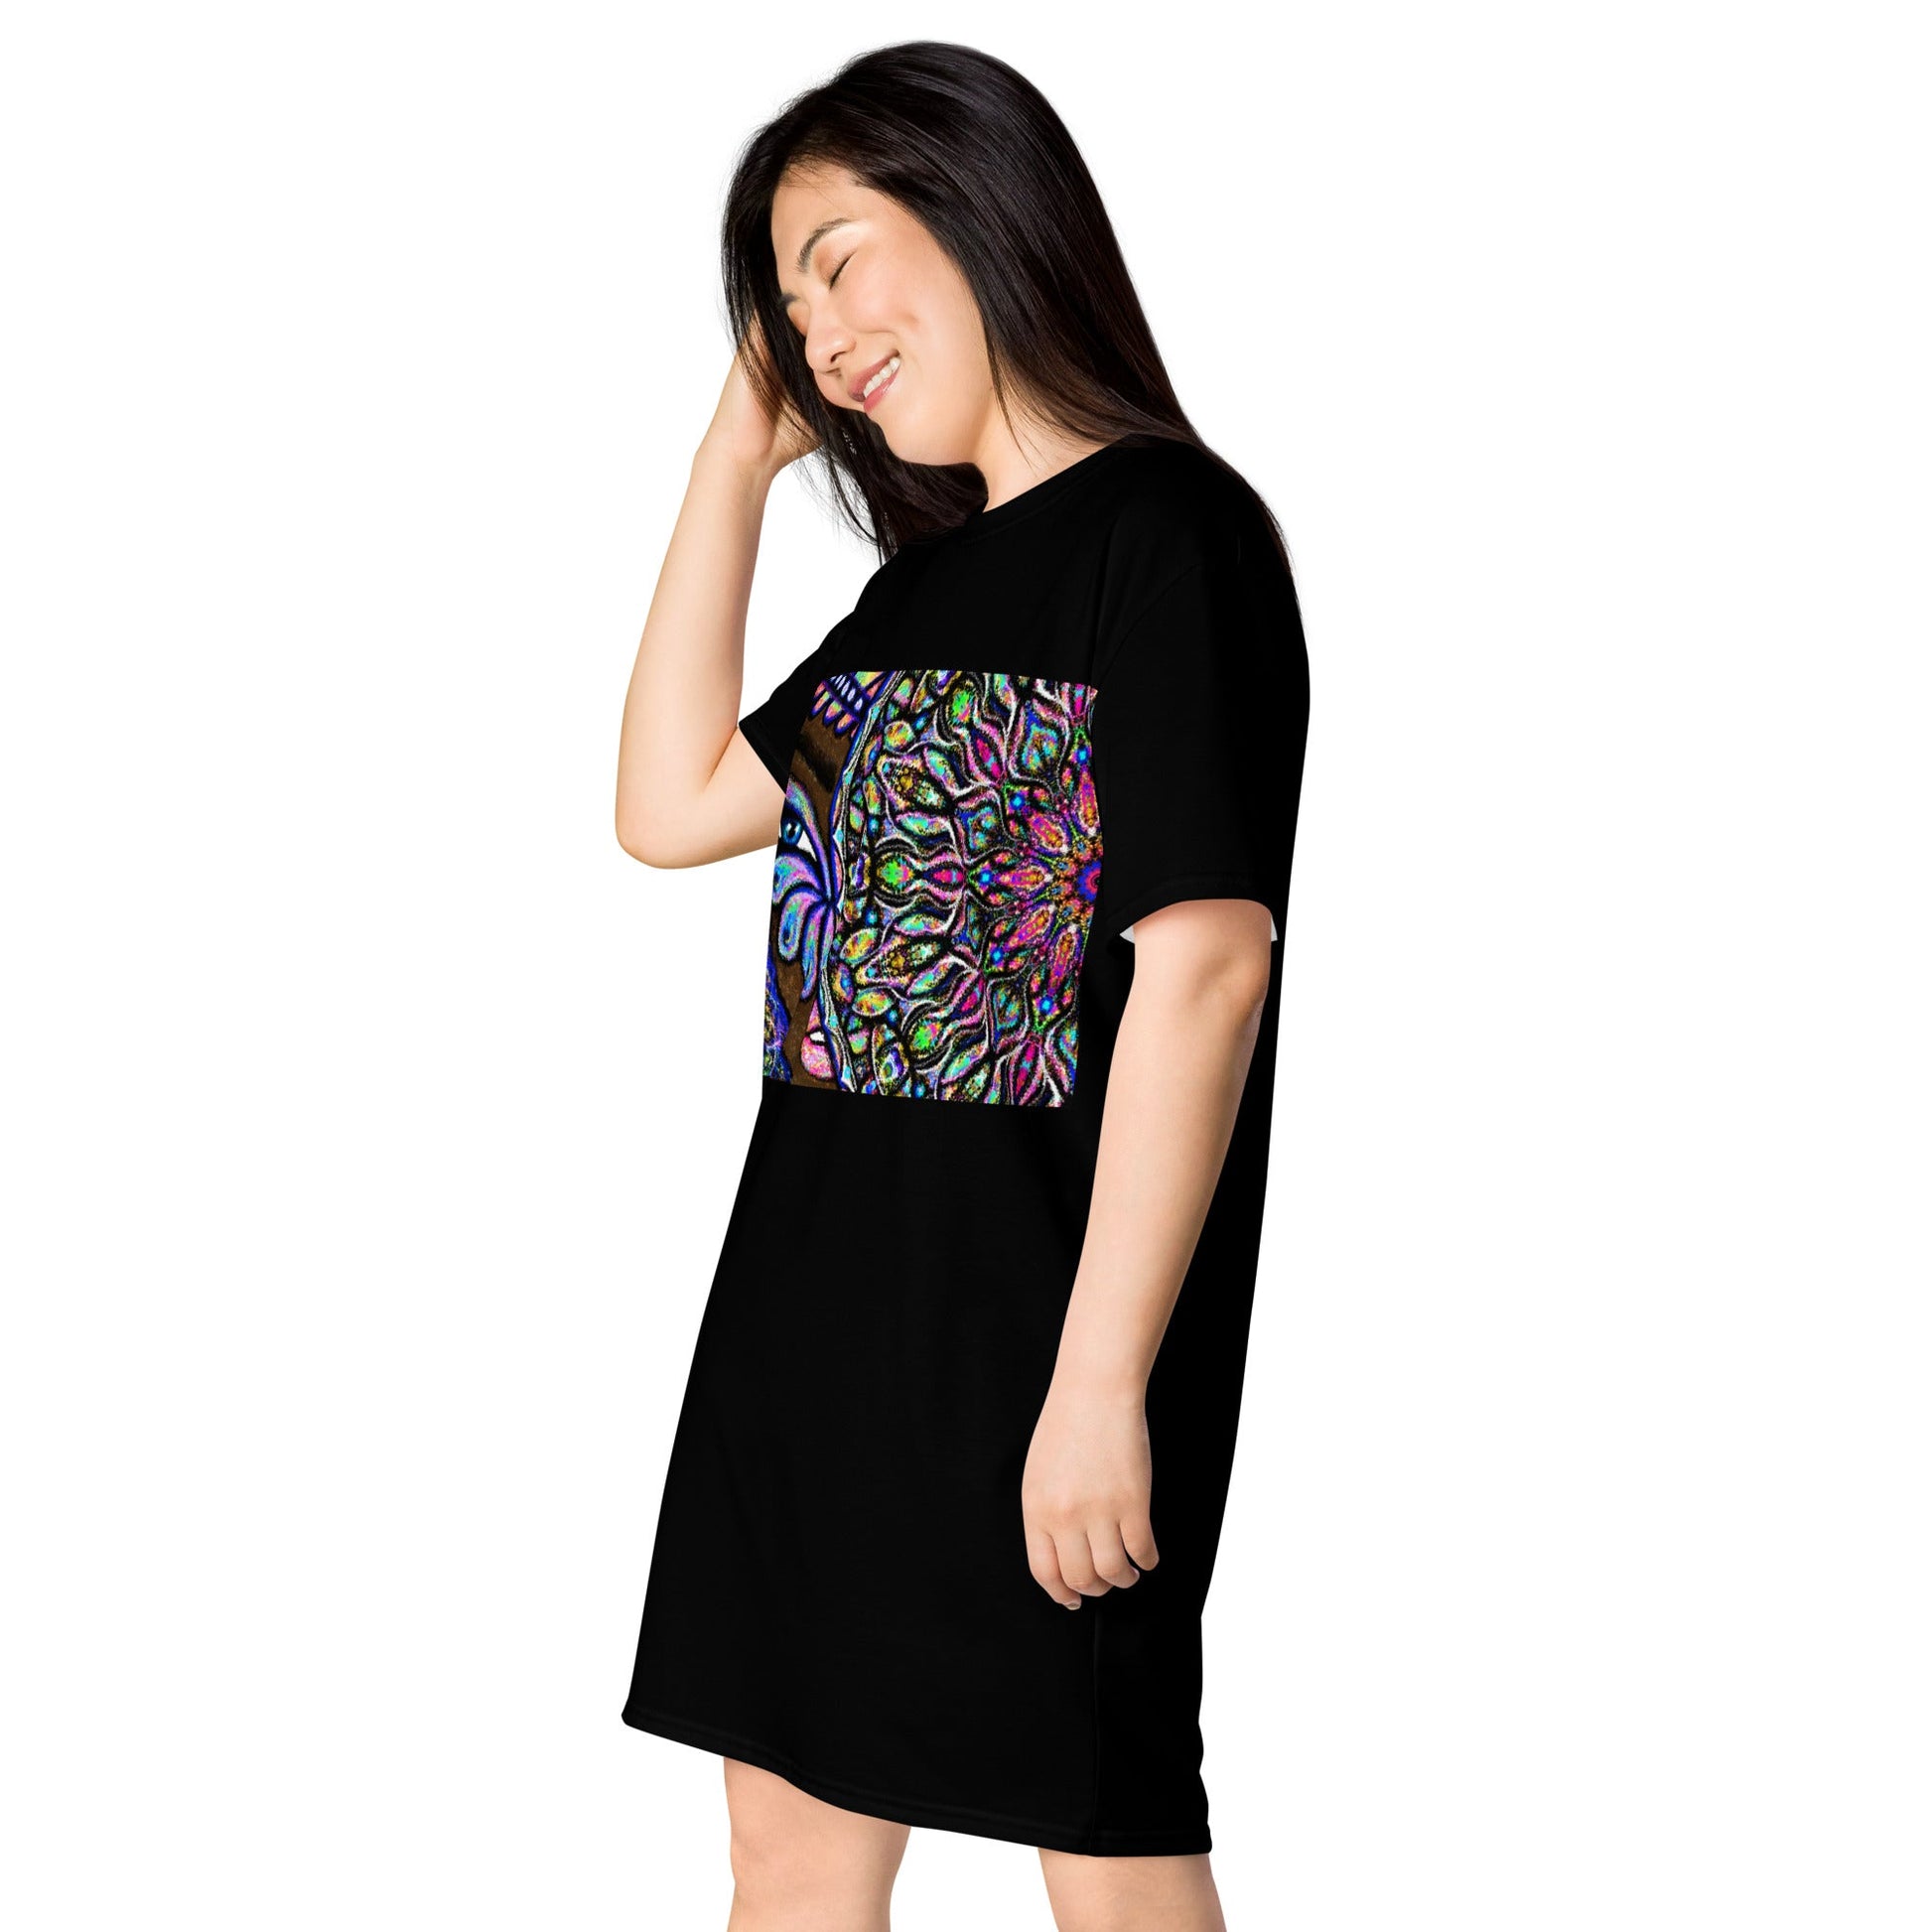 PEACOCK EYES Women's T-Shirt Dress - Bonotee